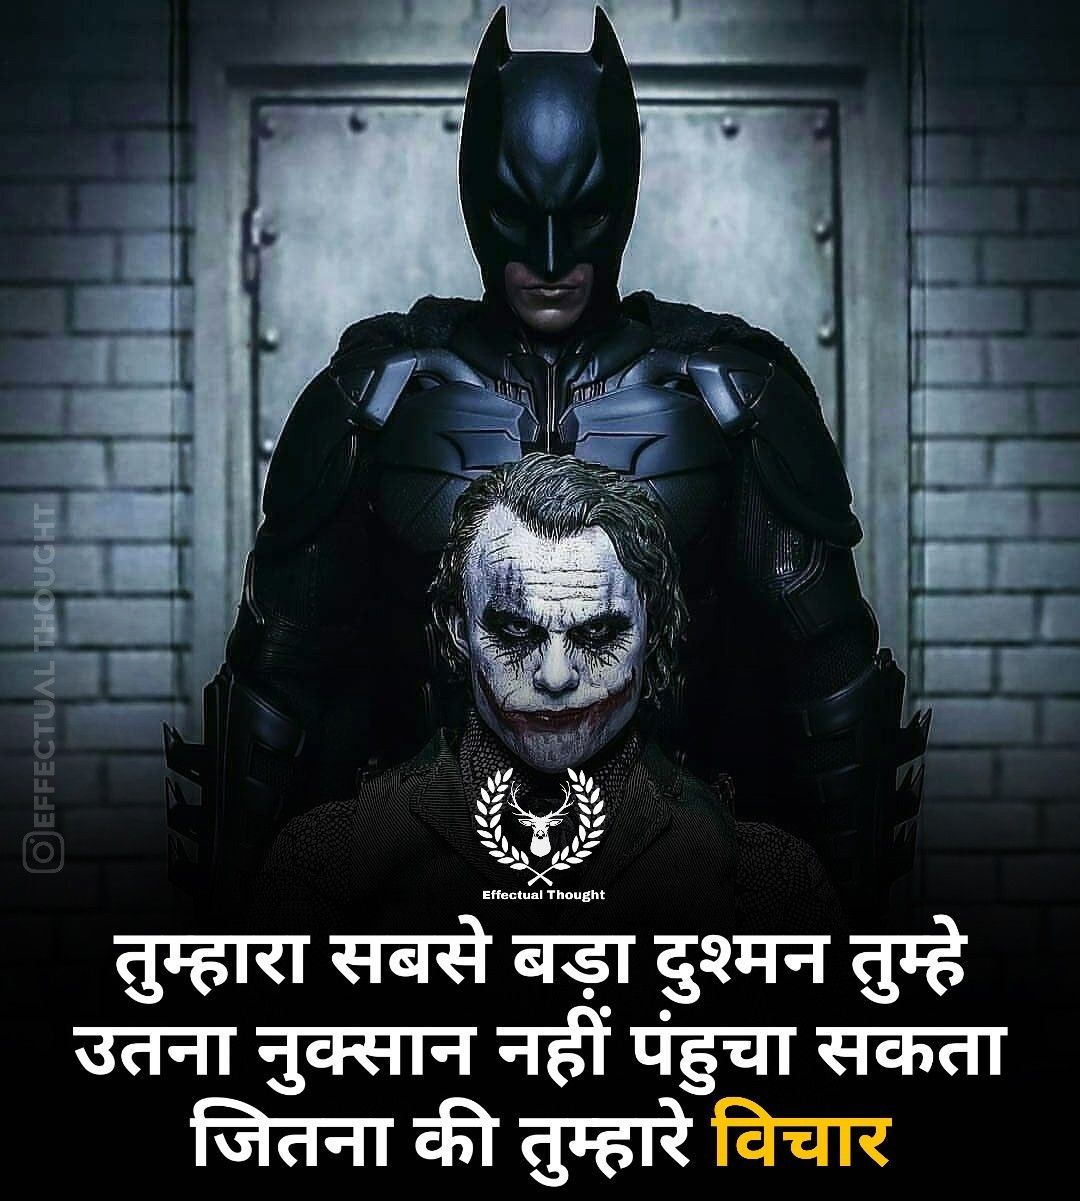 Hindi Motivational Thought effectual thought. Batman joker